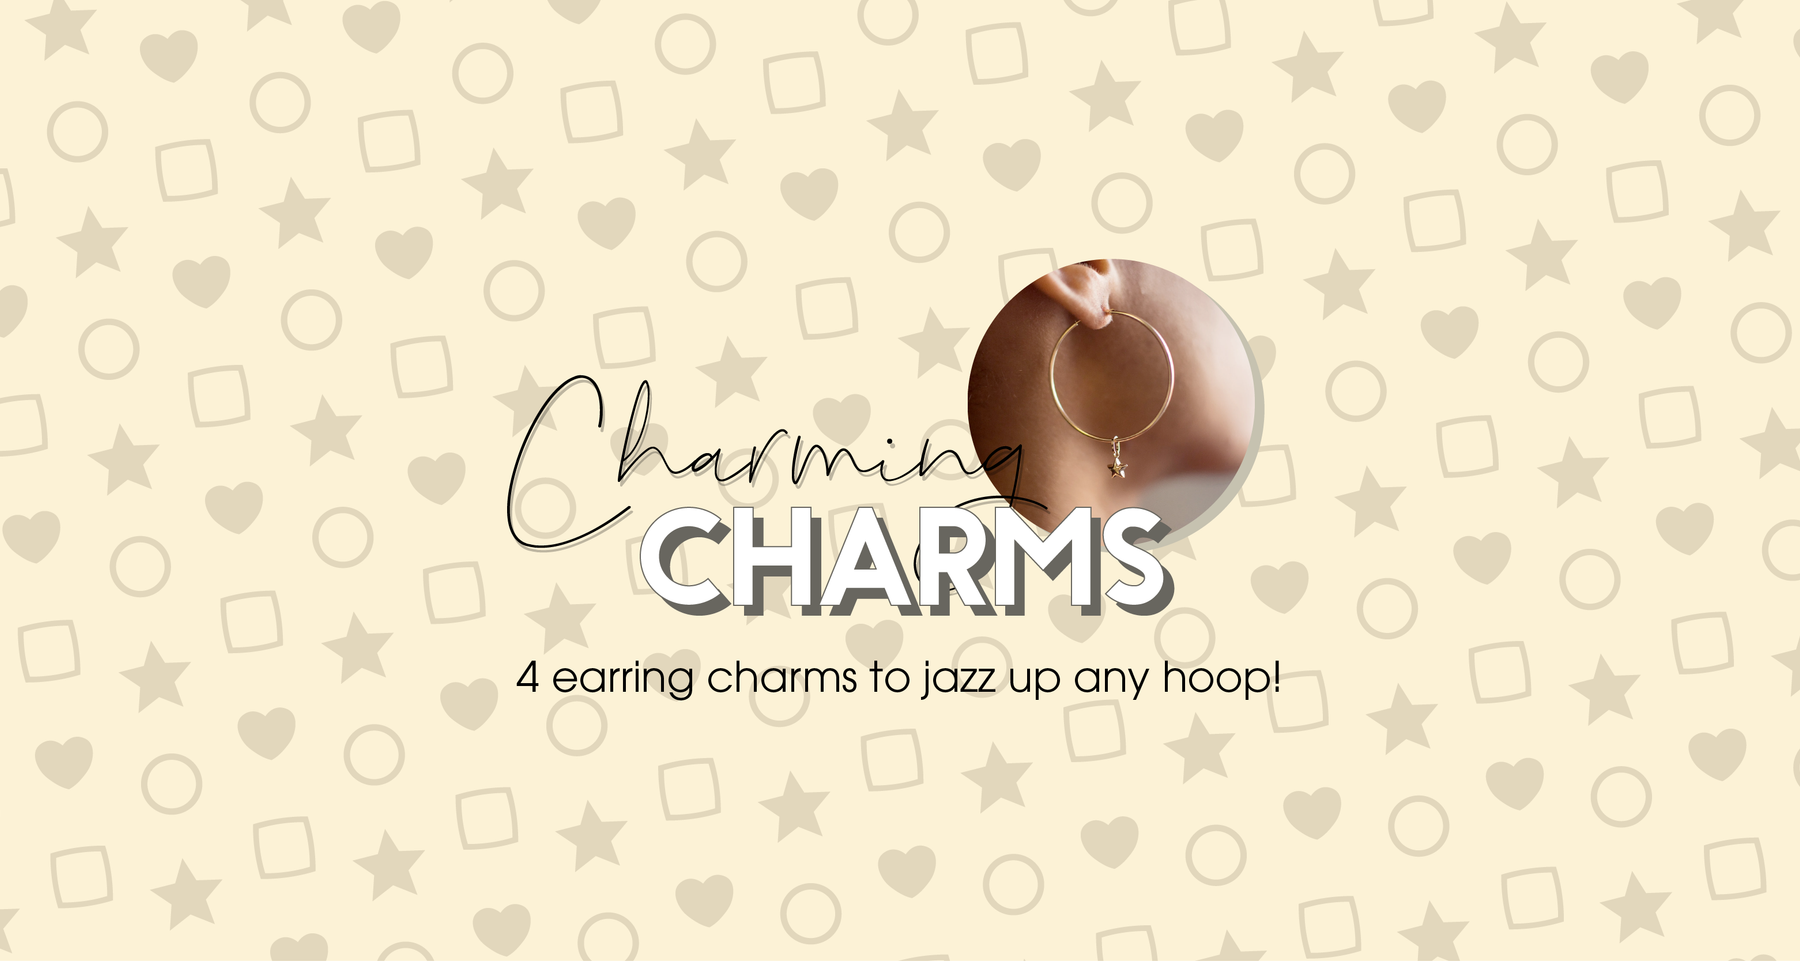 Charming Charms